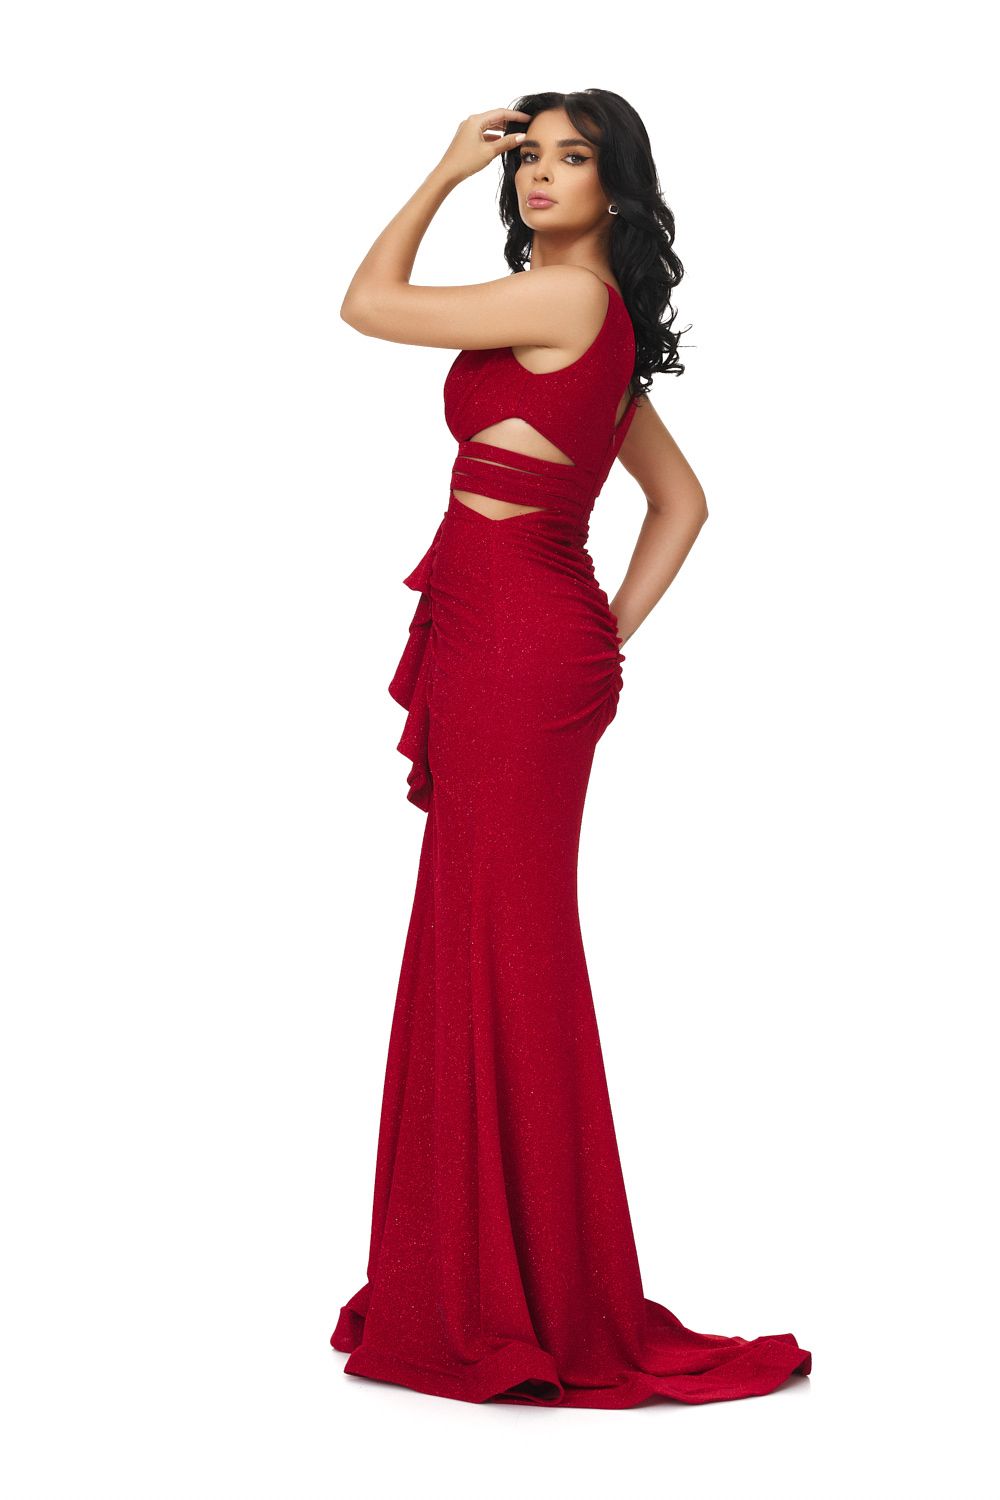 Long red dress for women by Pestias Bogas